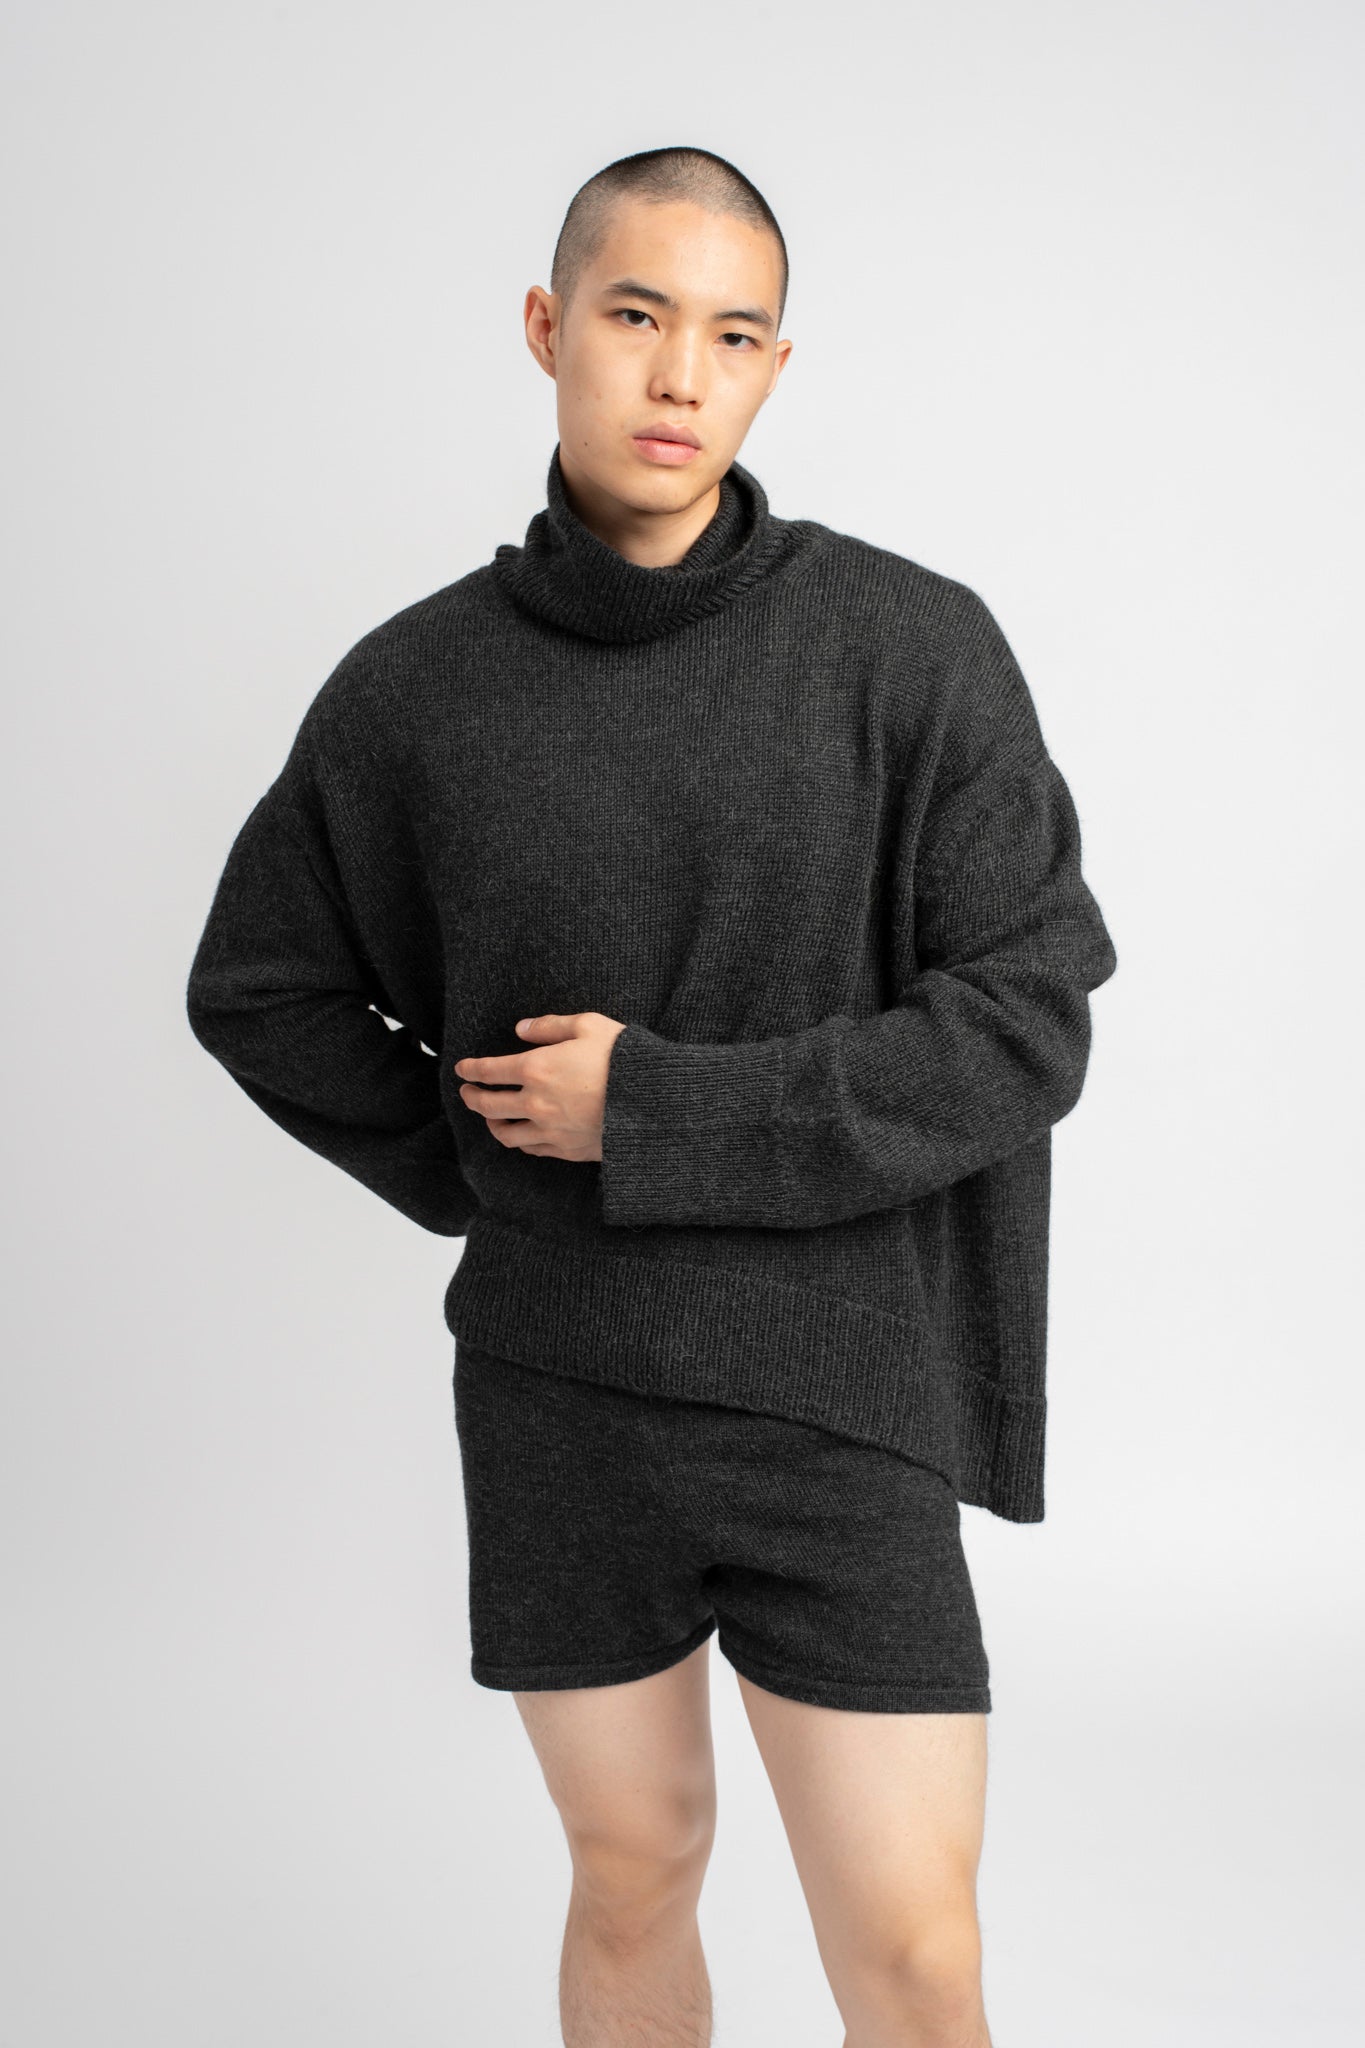 | Fluid Dark Knitwear Alpaca Grey Trade Shorts Fair Gender